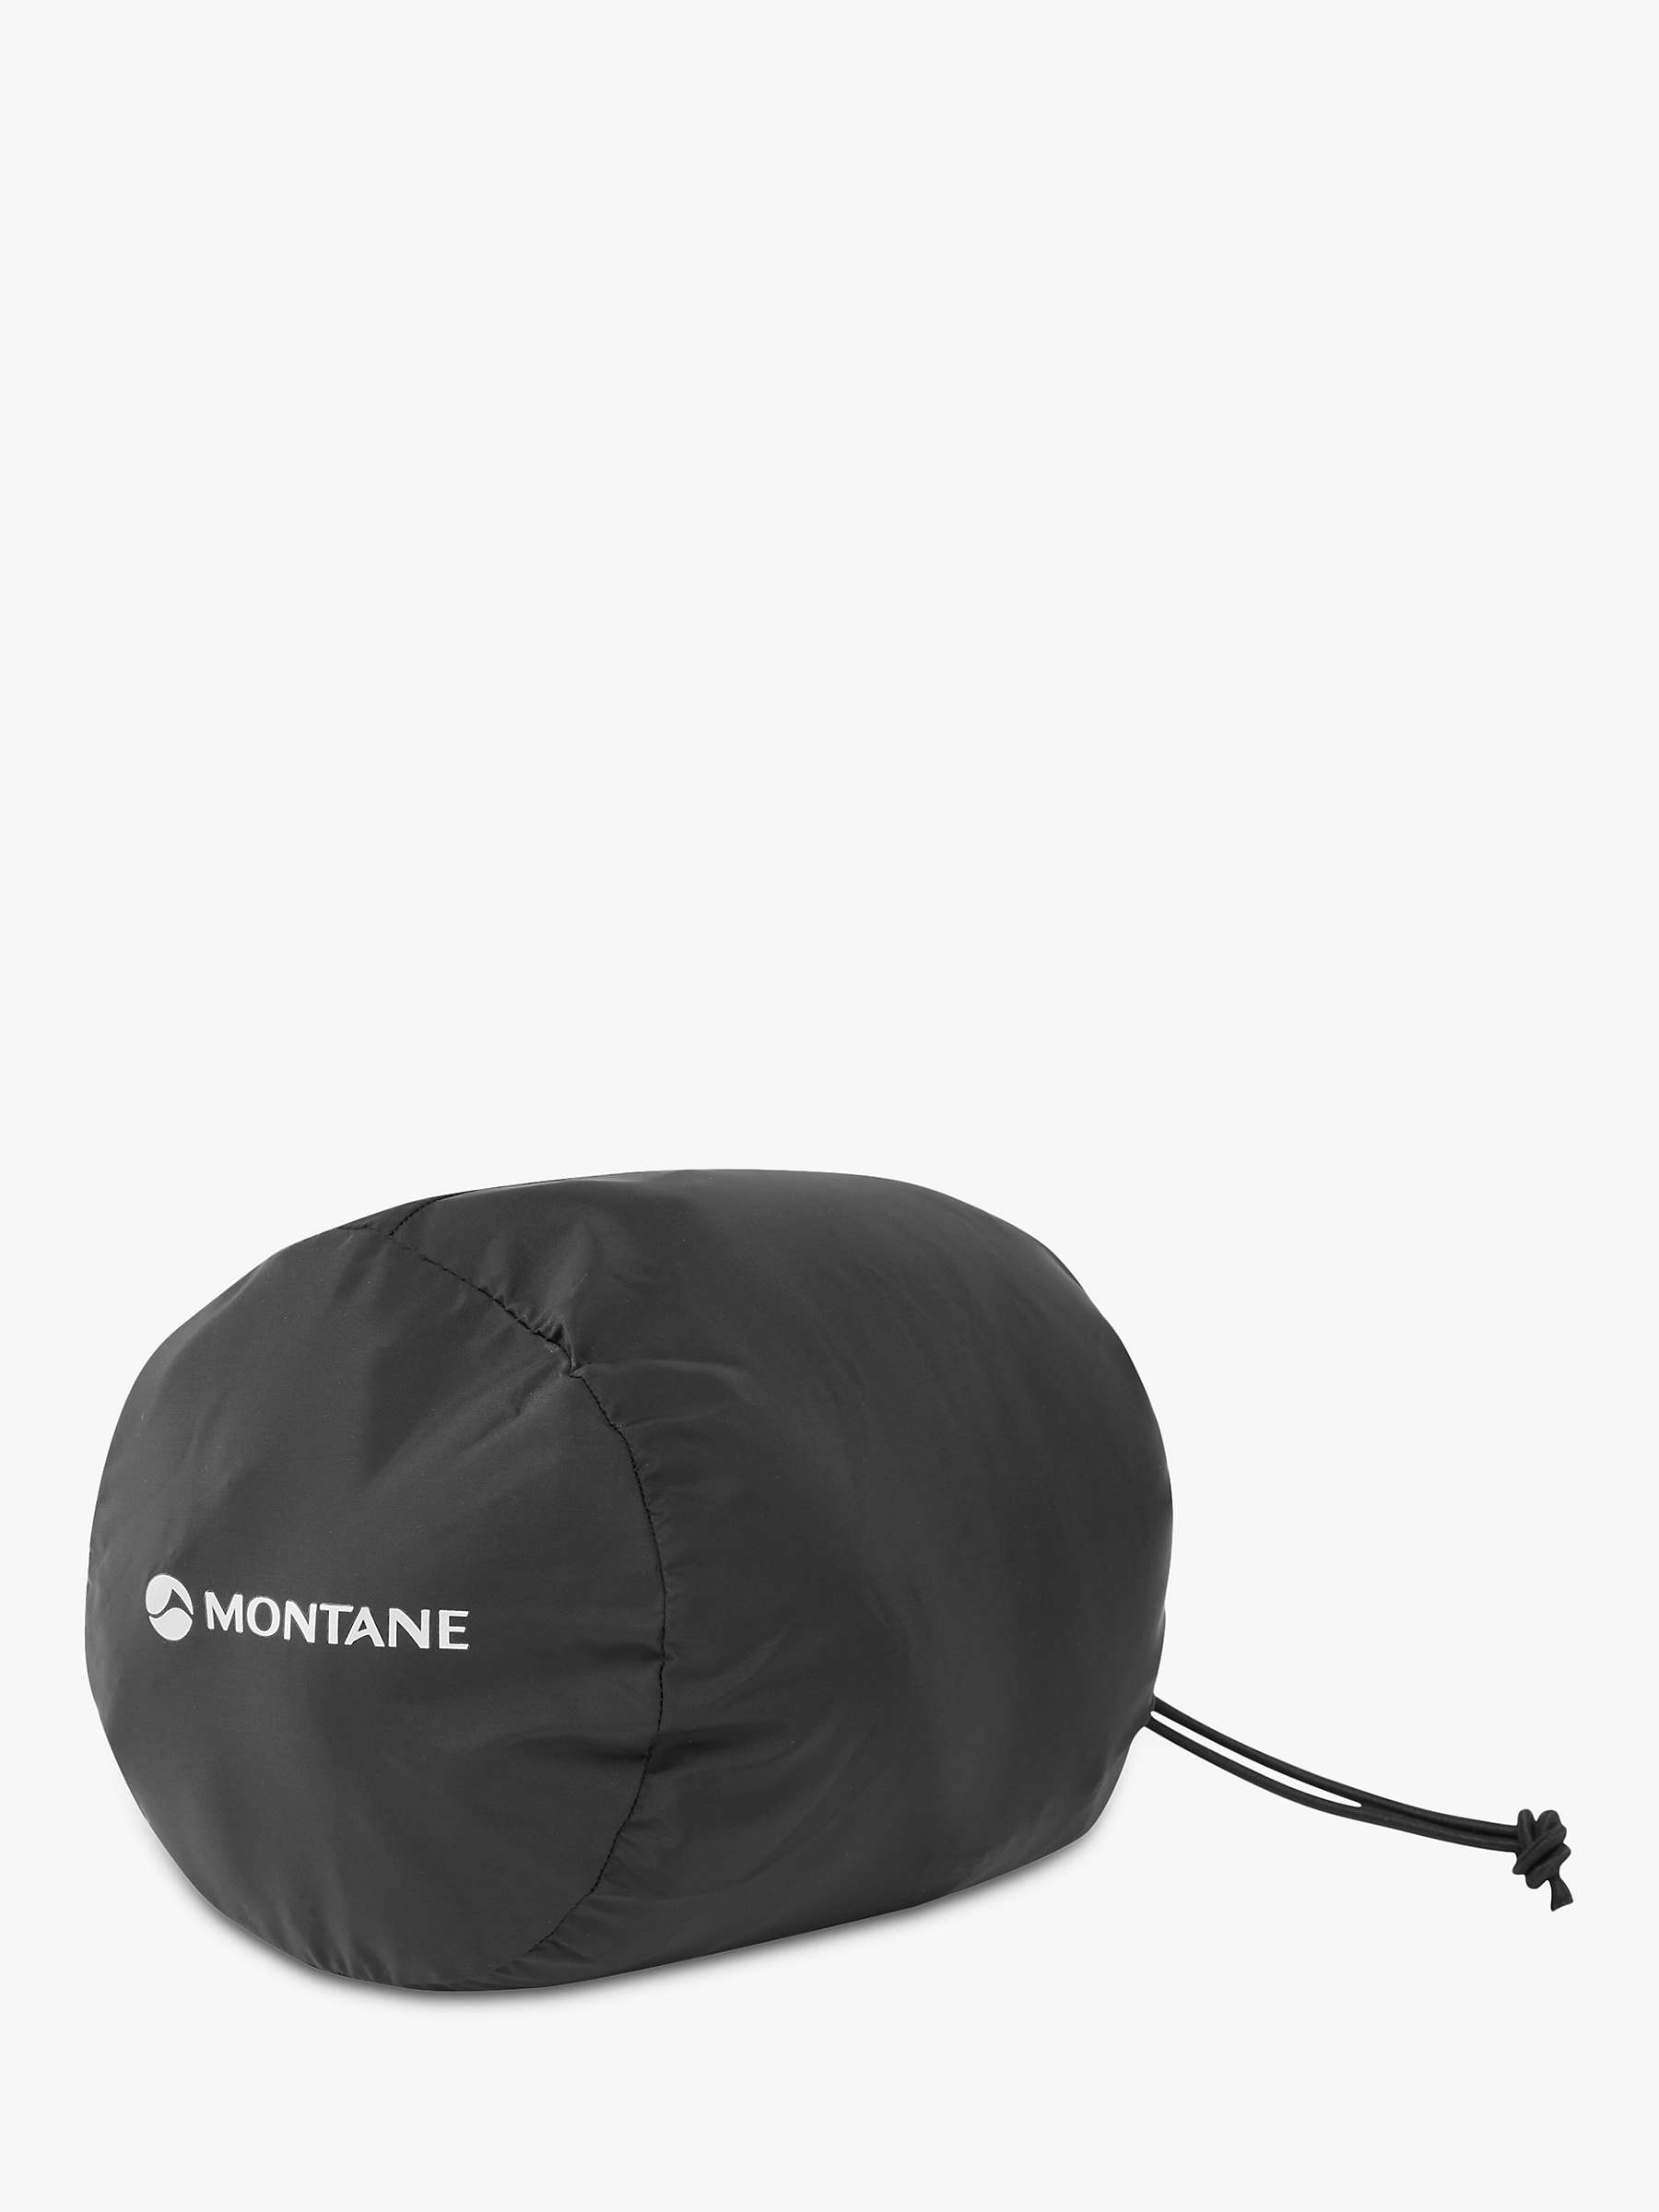 Buy Montane Anti-Freeze Hut Slippers, Black Online at johnlewis.com